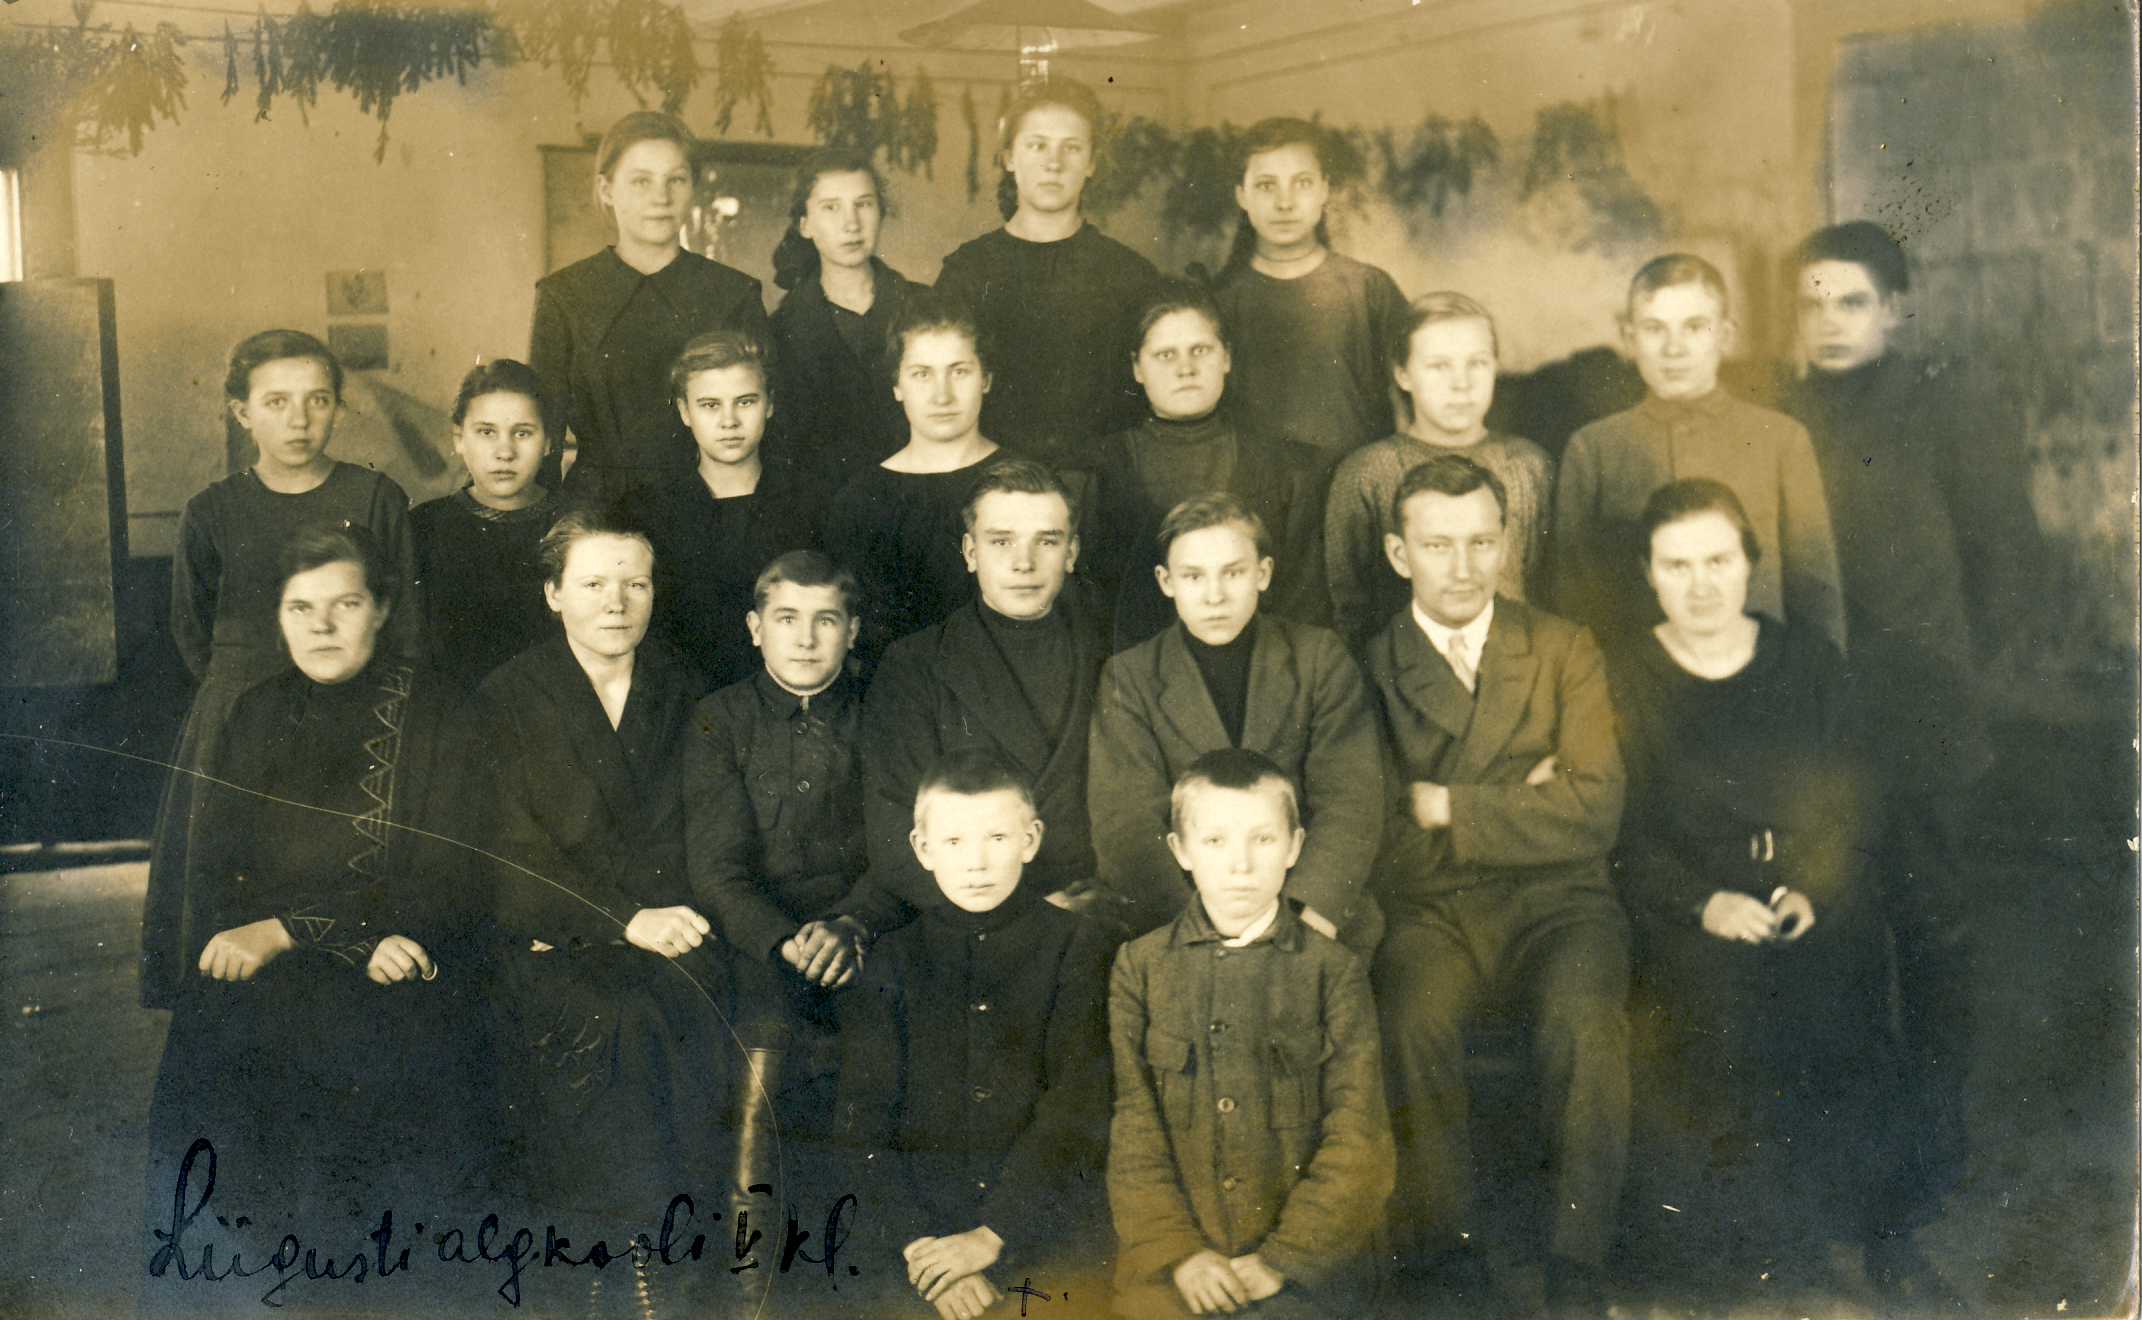 Liigusti primary school, V kl. 1920s.